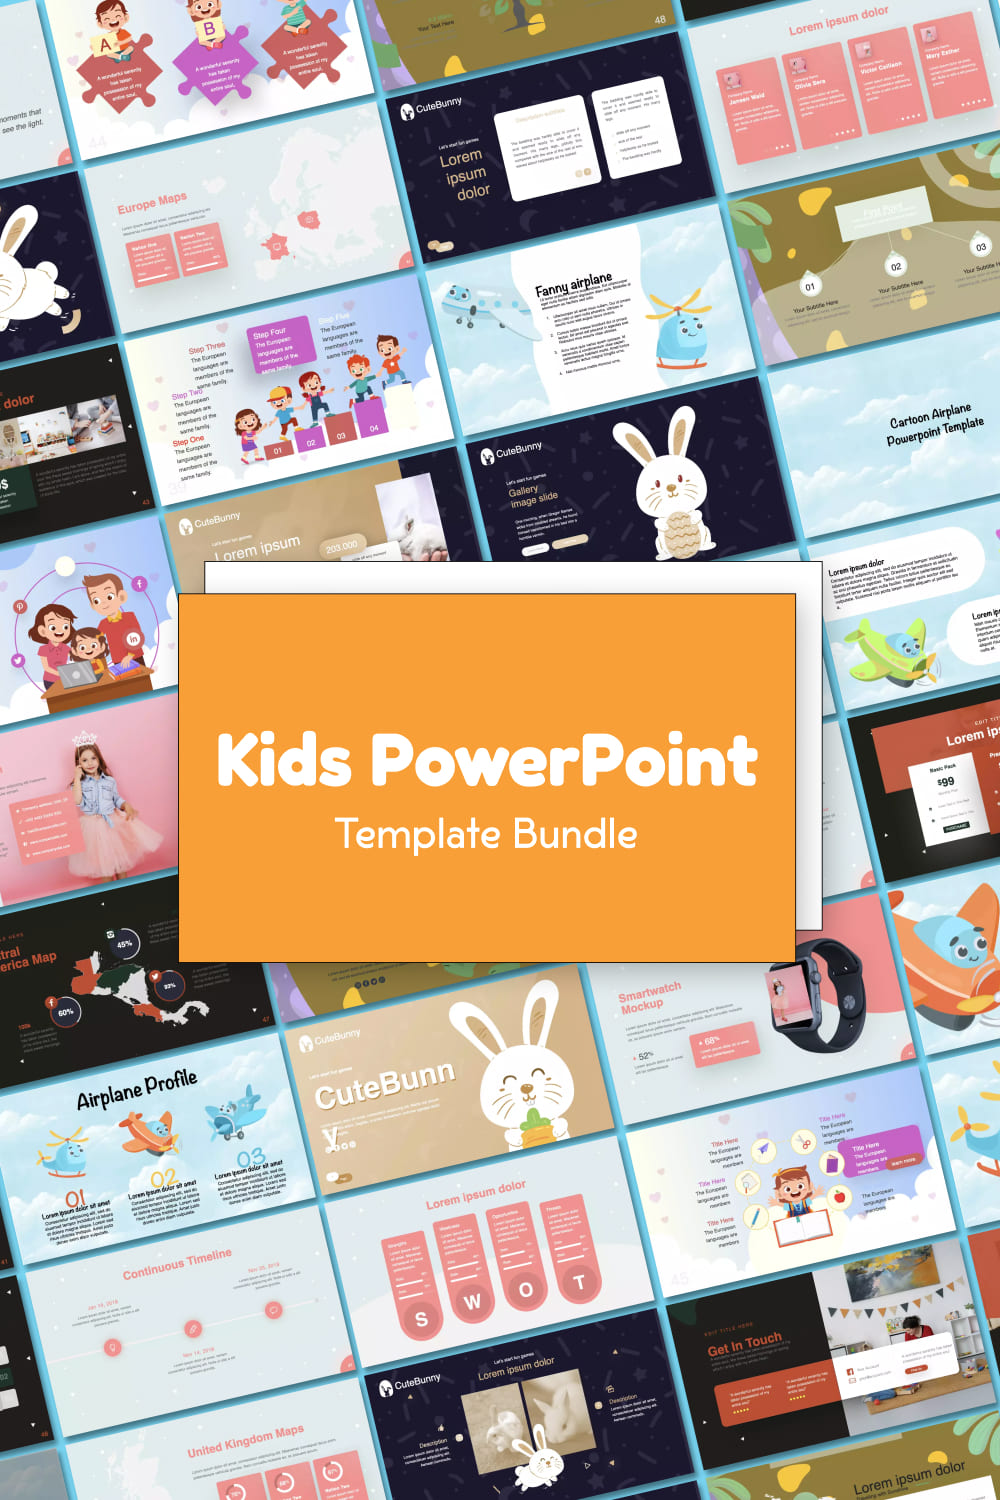 Kids PowerPoint Templates Bundle - Pinterest.